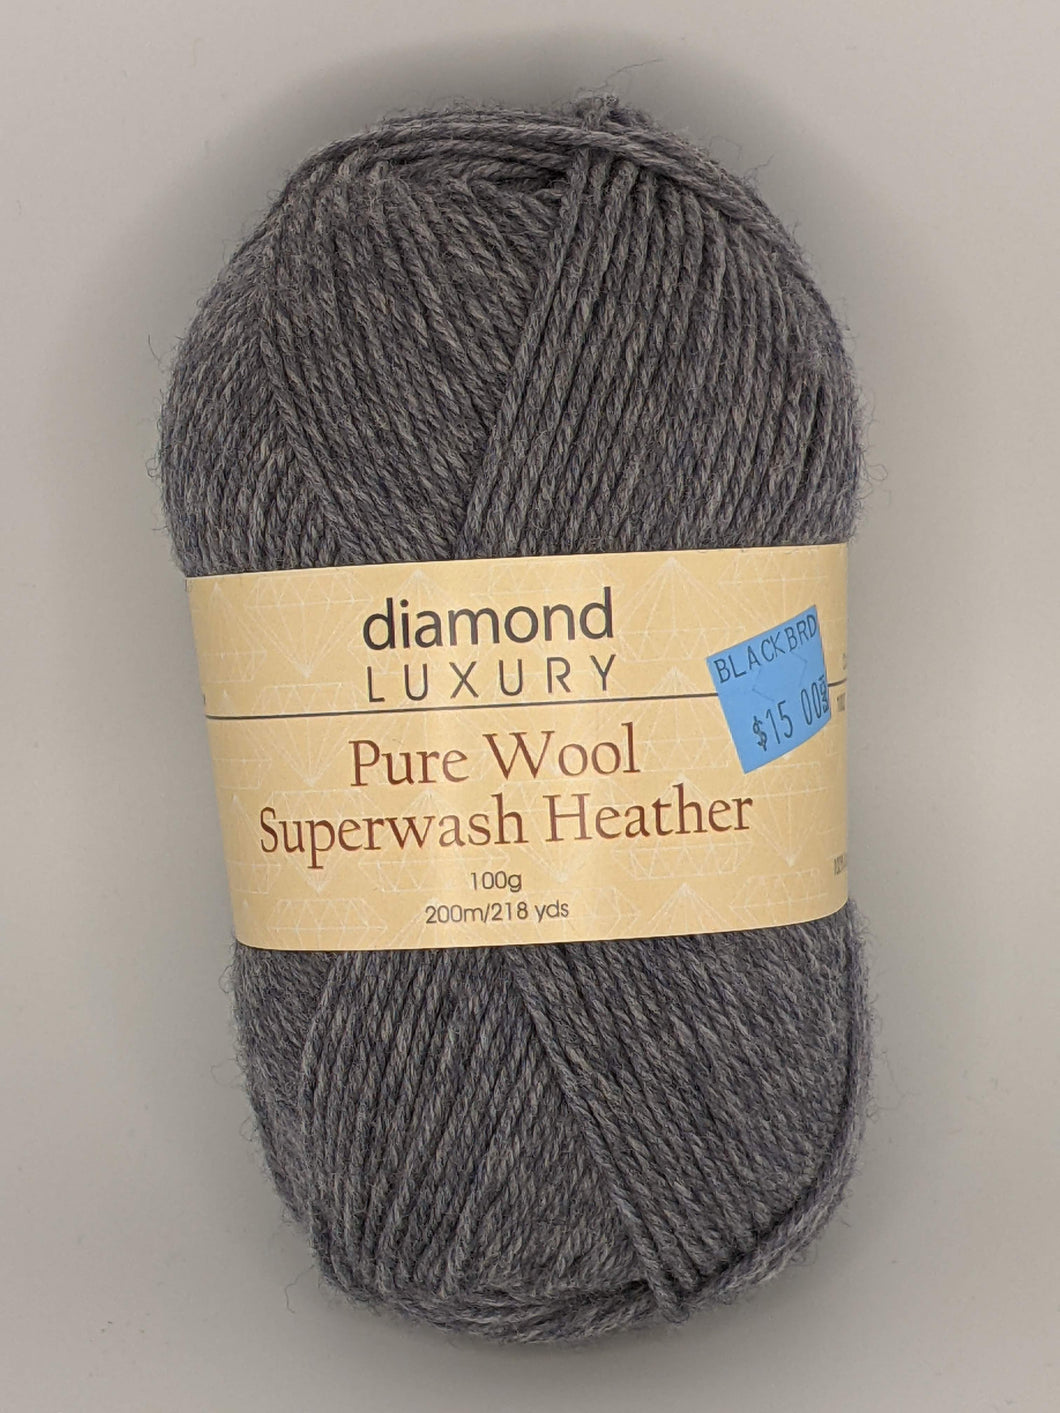 Diamond Luxury Pure Wool Superwash Heather